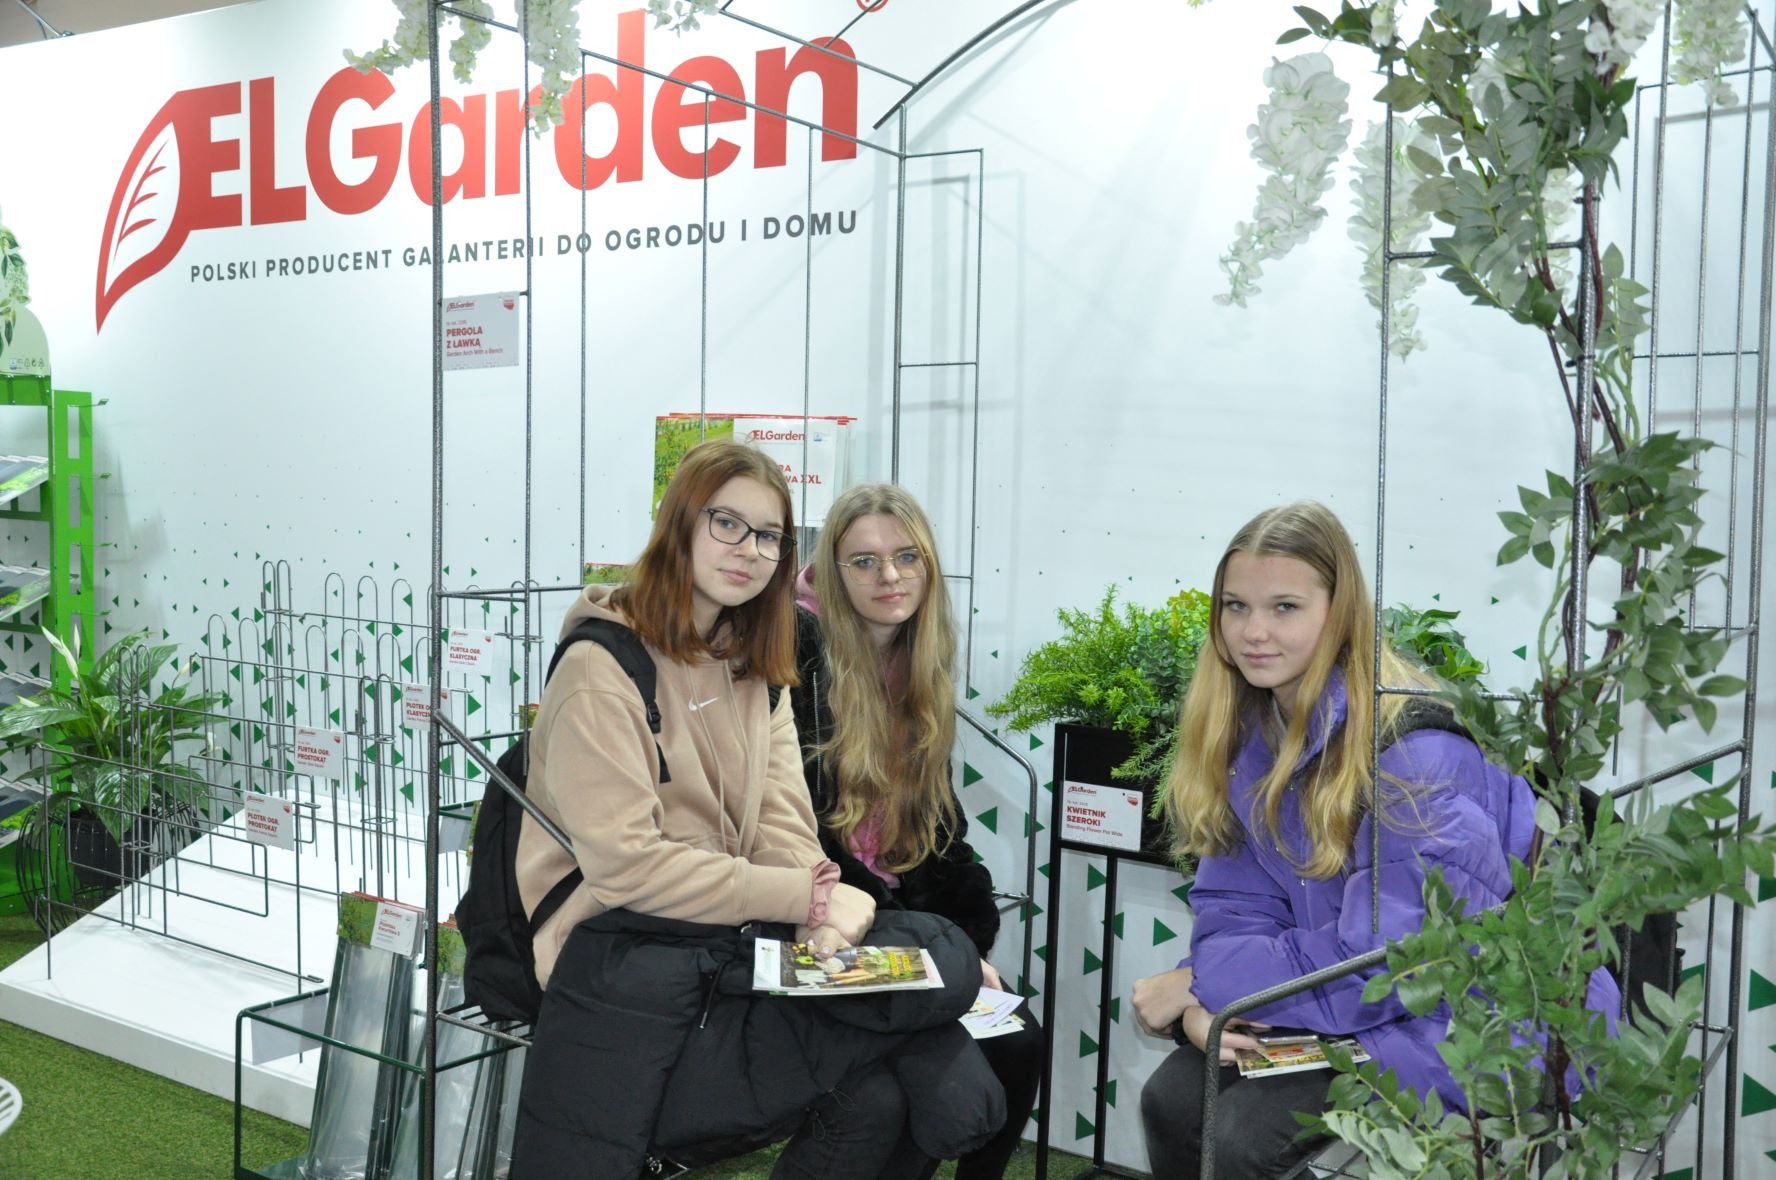 Gardenia 2022